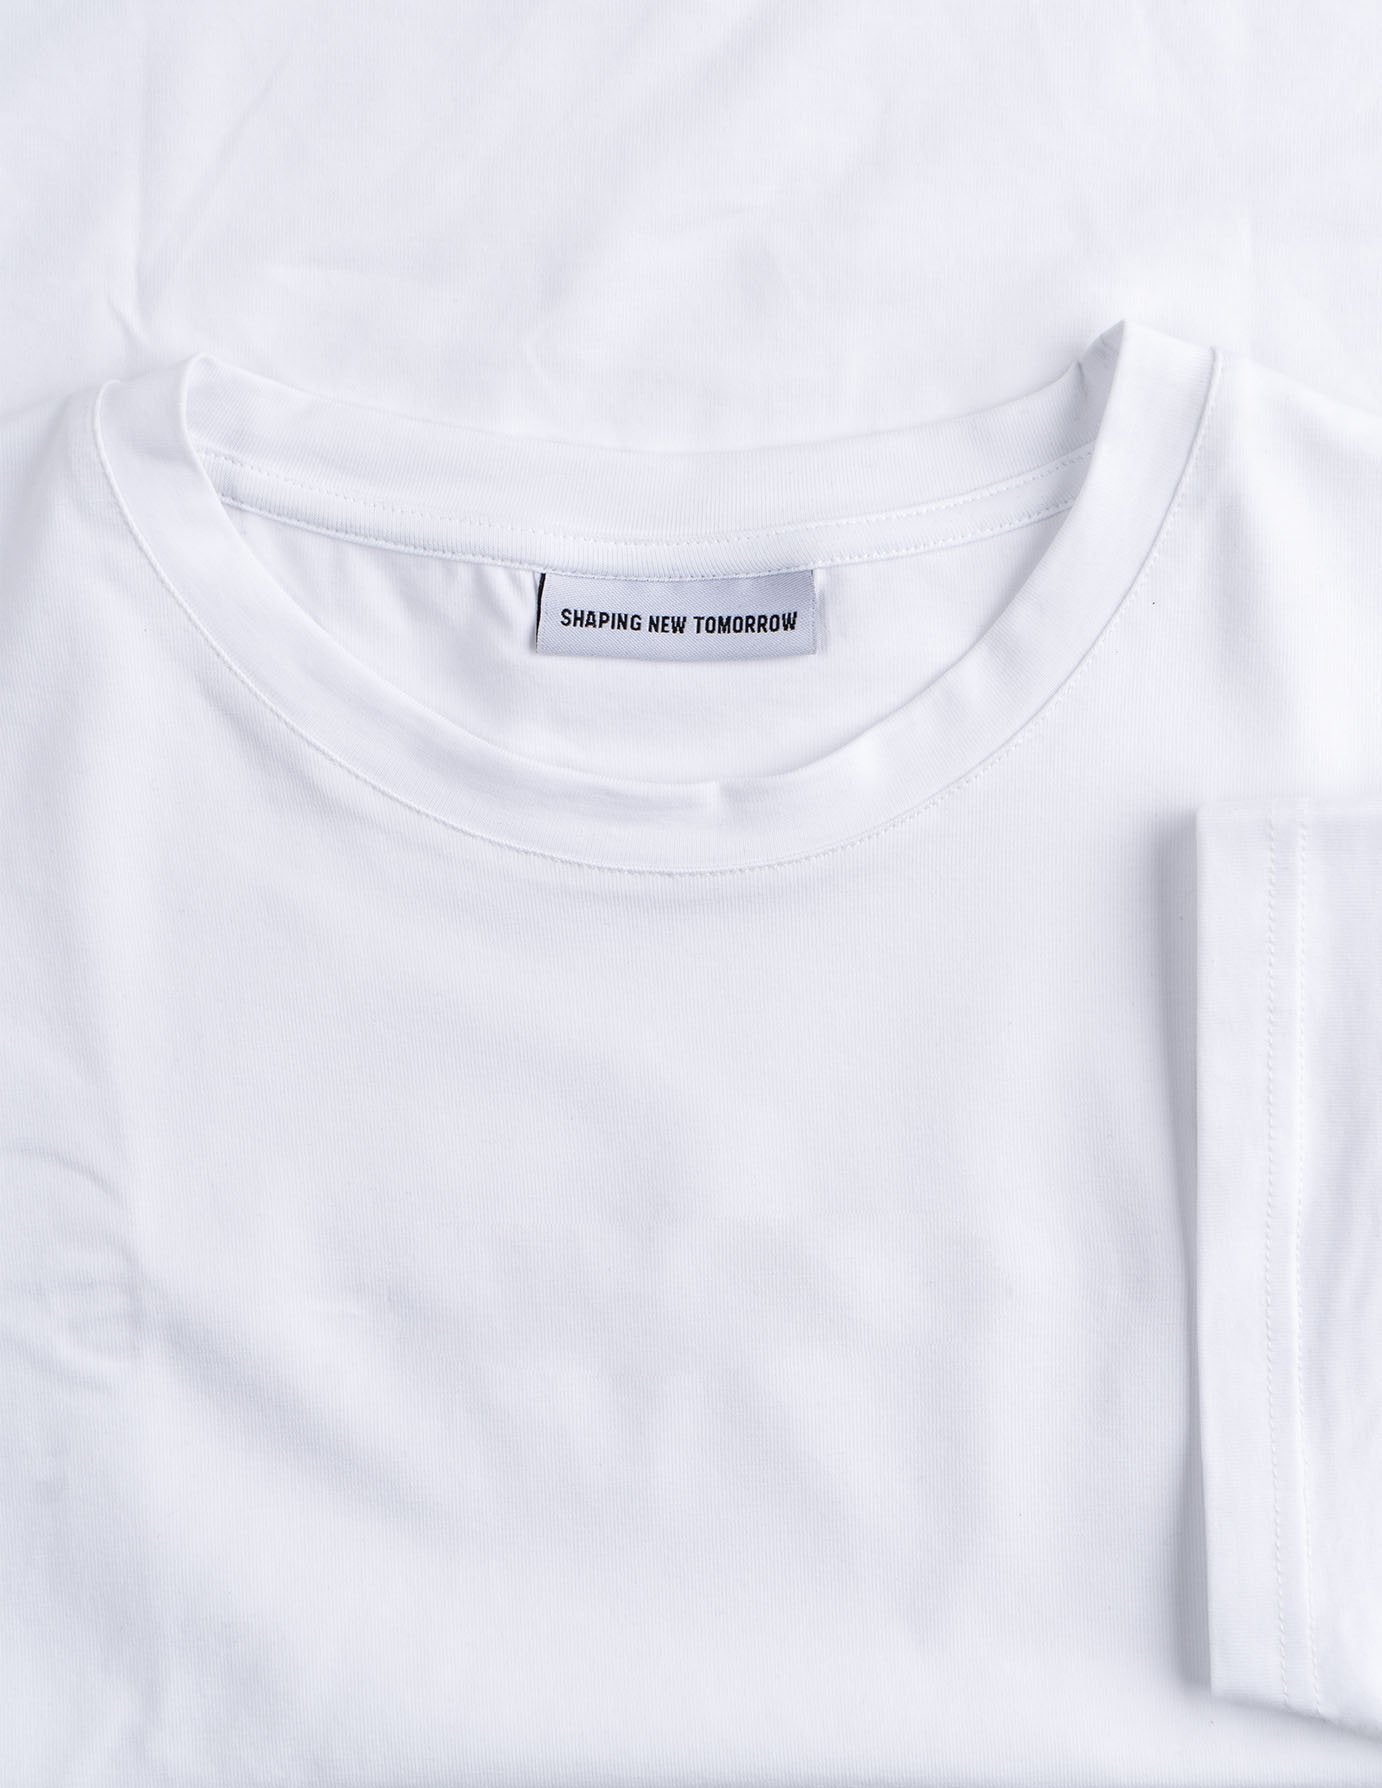 Supima T-shirt White | SHAPING NEW TOMORROW